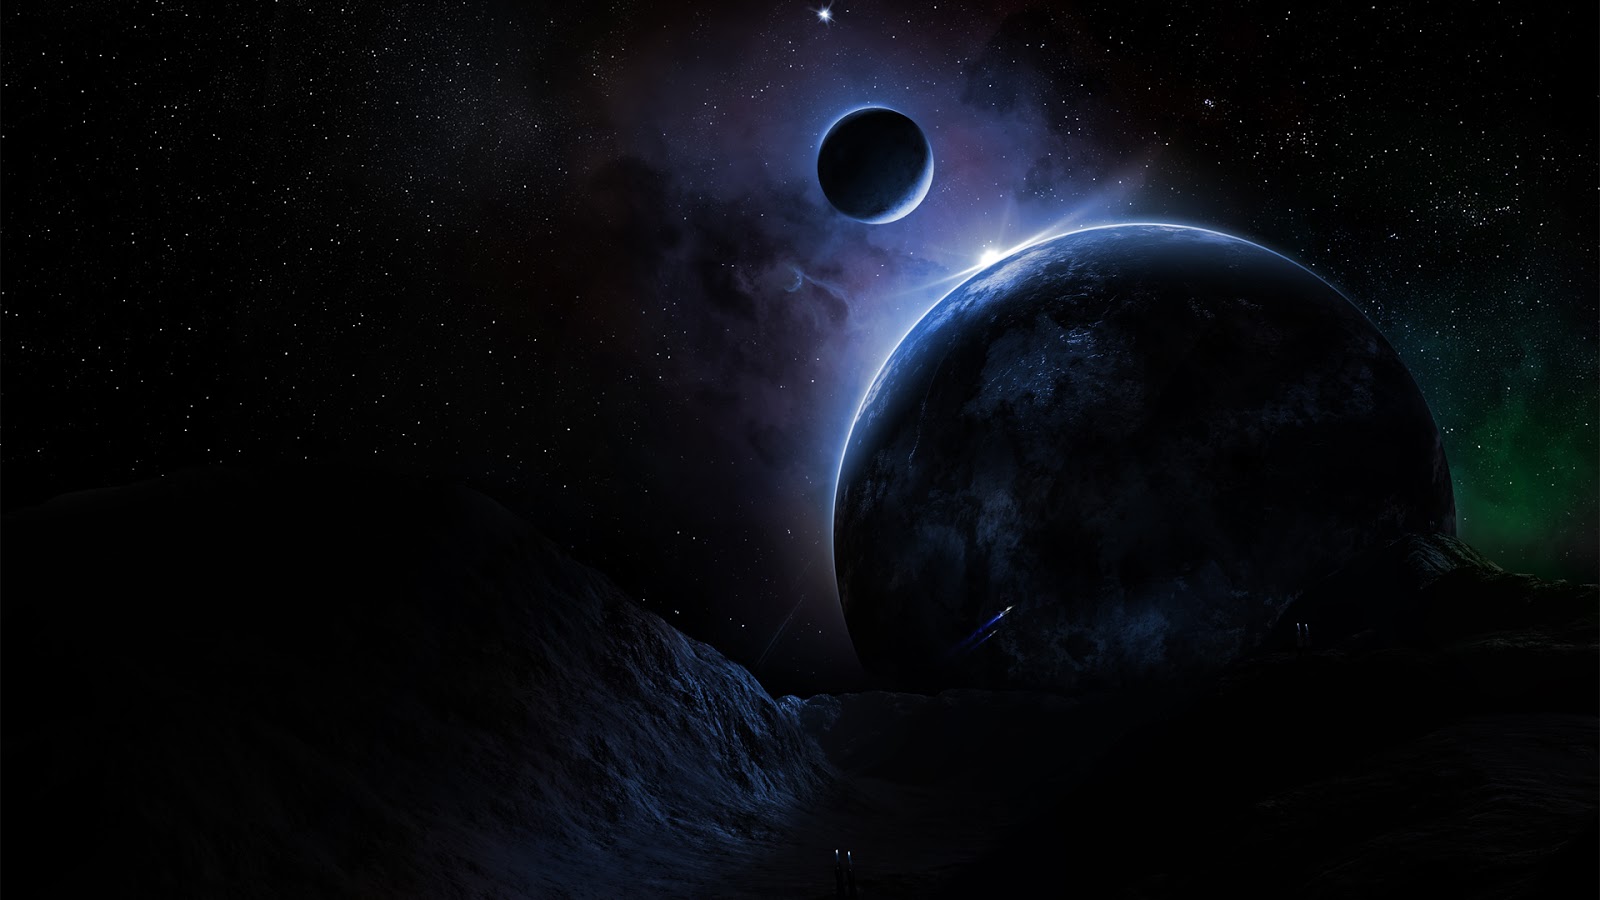 blu ray fondo de pantalla hd,espacio exterior,universo,objeto astronómico,atmósfera,planeta